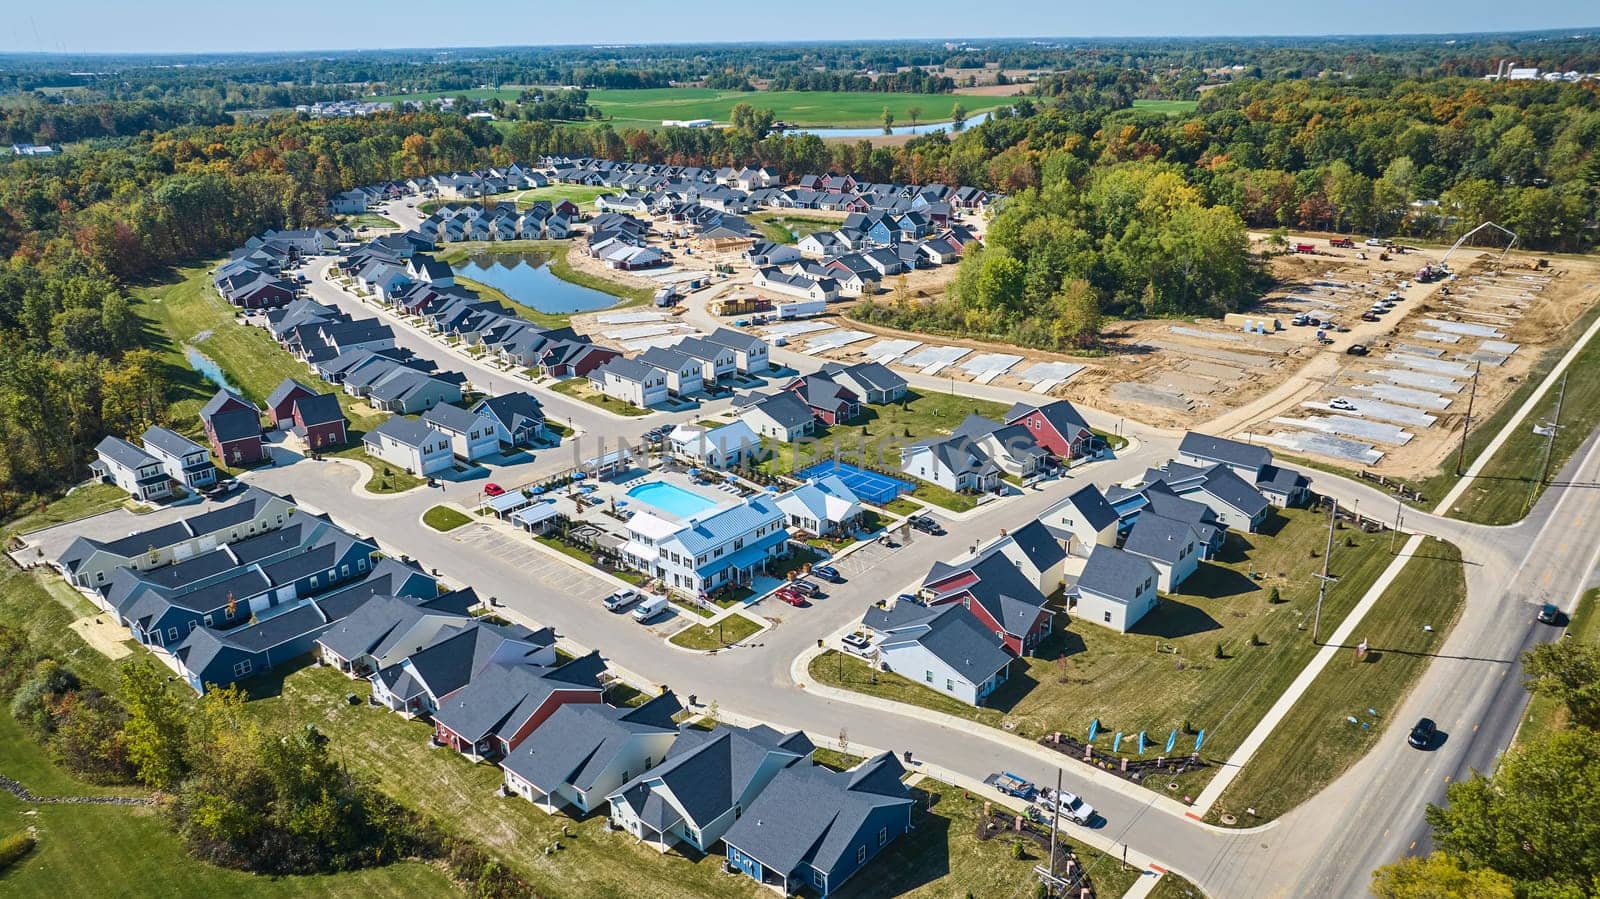 Expanding Suburban Housing Development in Fort Wayne, Indiana - Aerial View